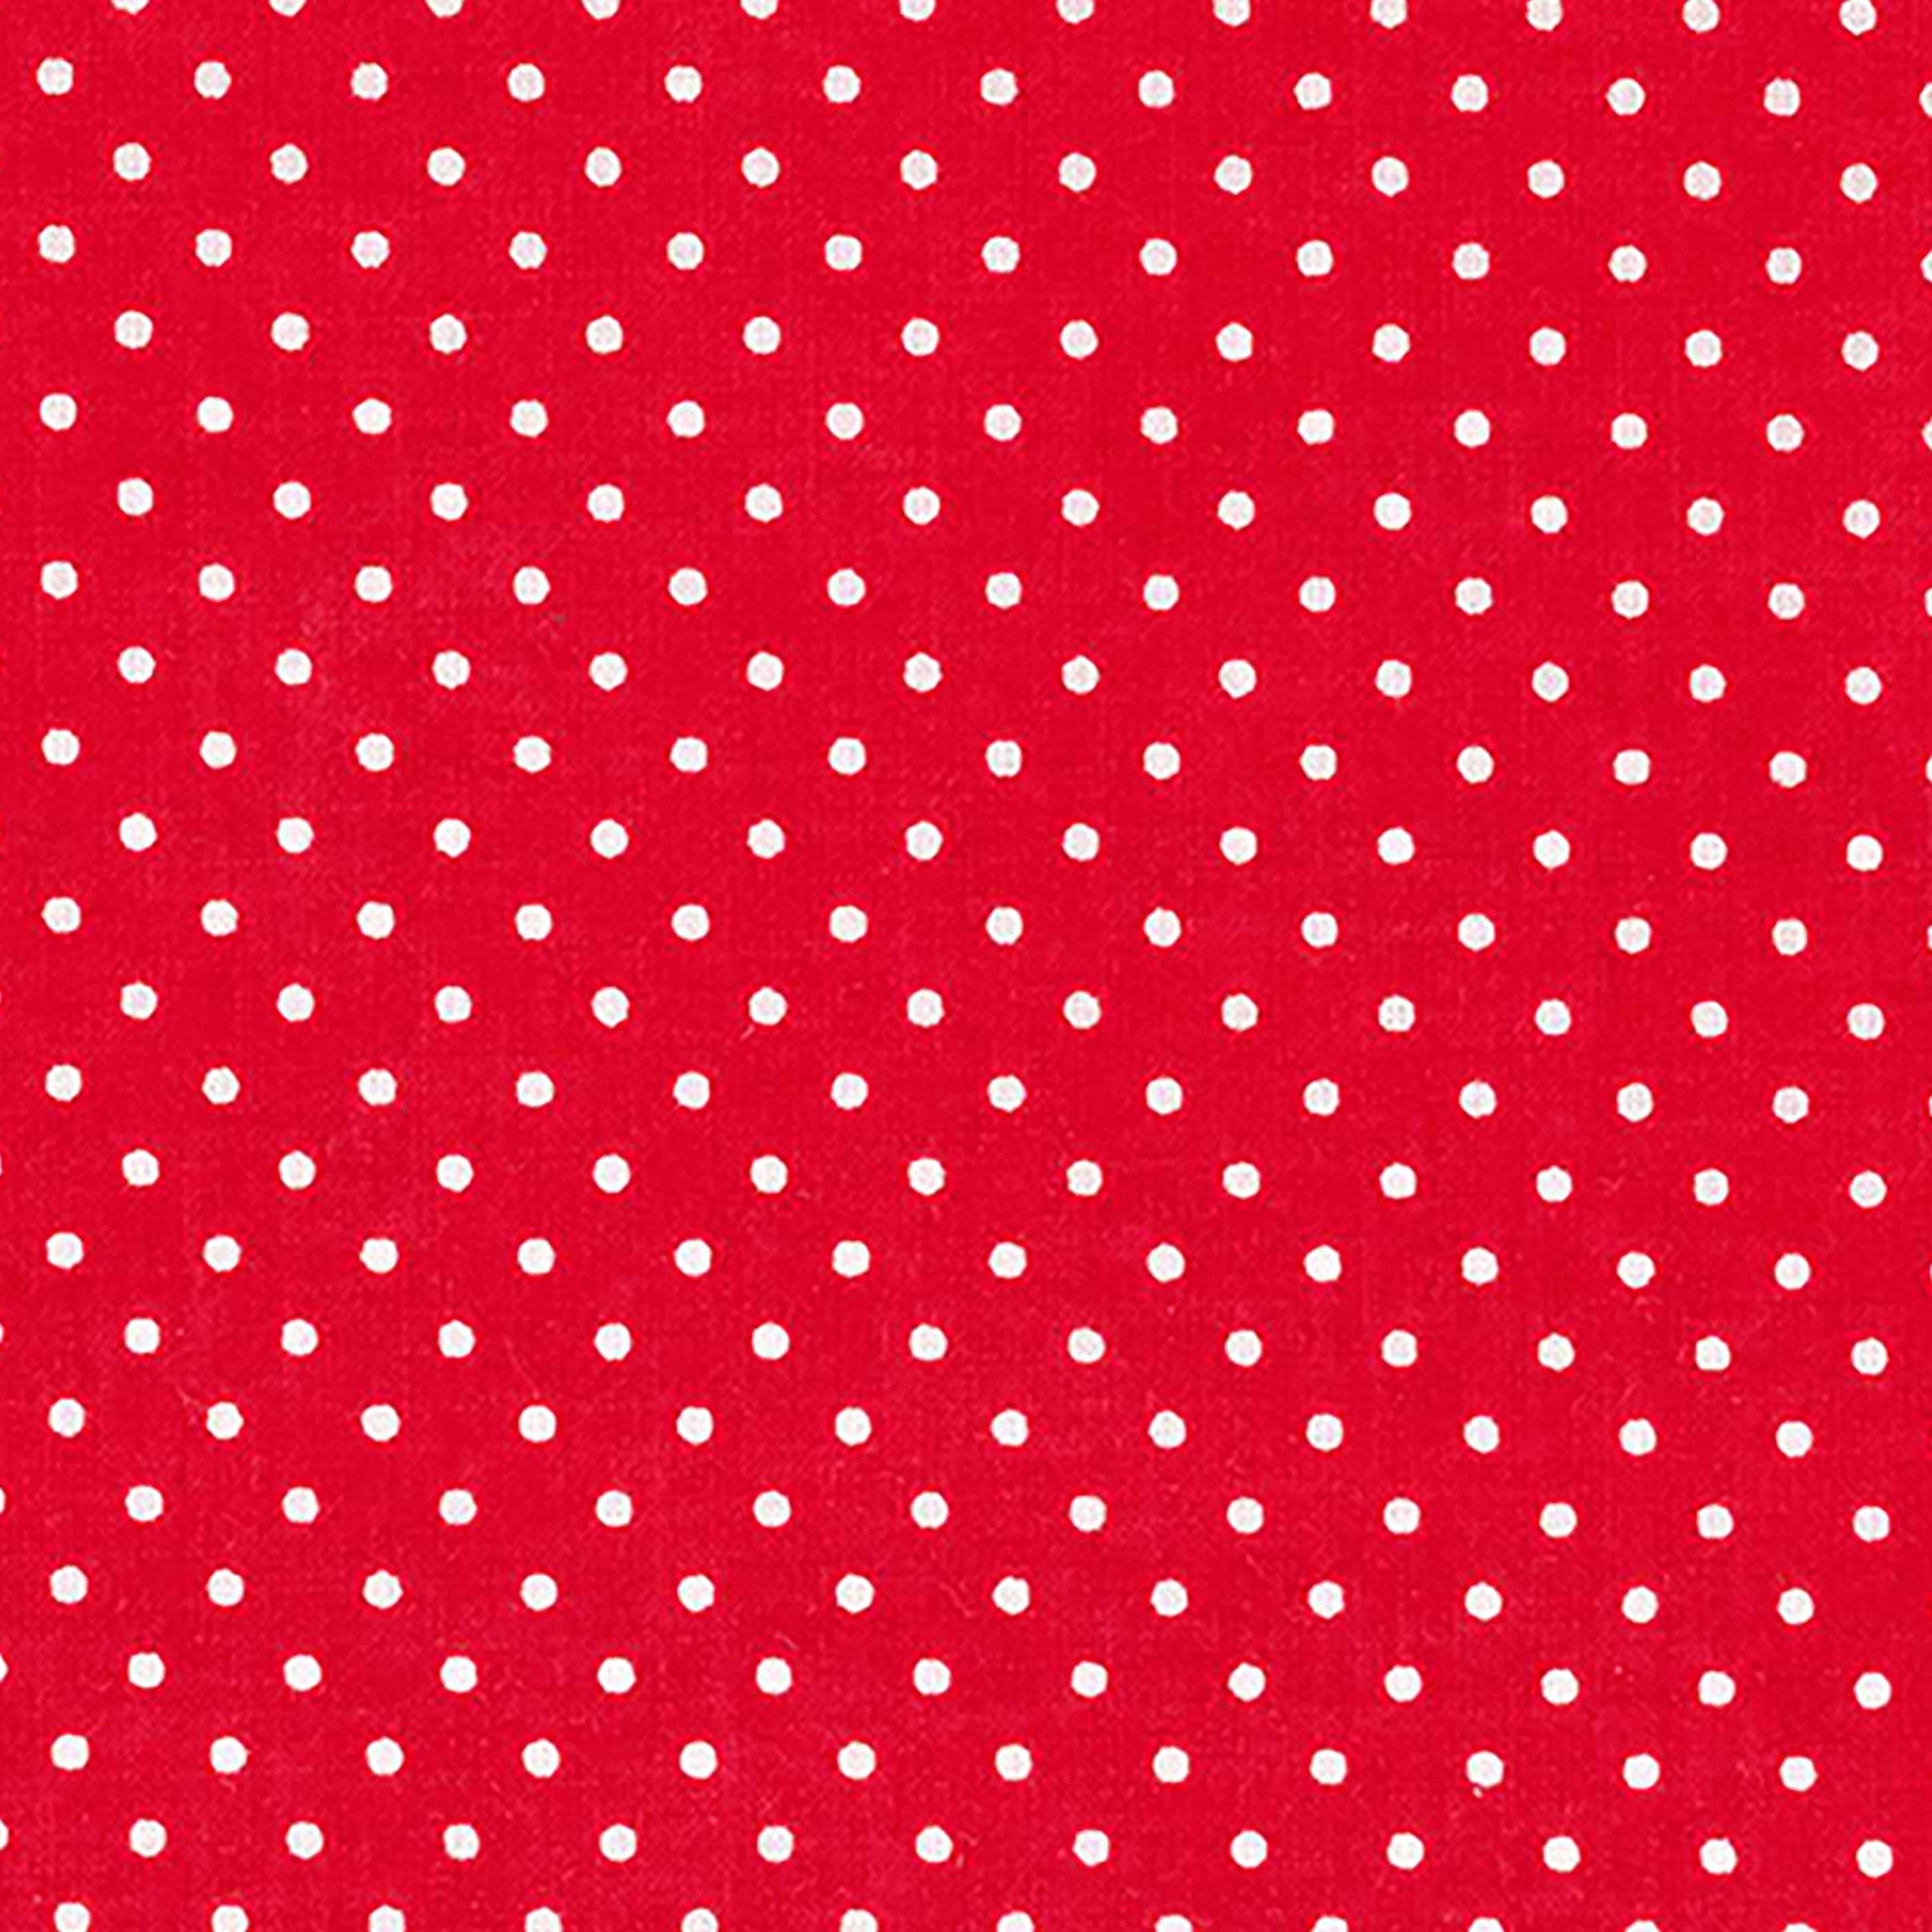 Minimer Perth Blackborough skelet Fabric Traditions Red Polka Dot Cotton Fabric | Michaels